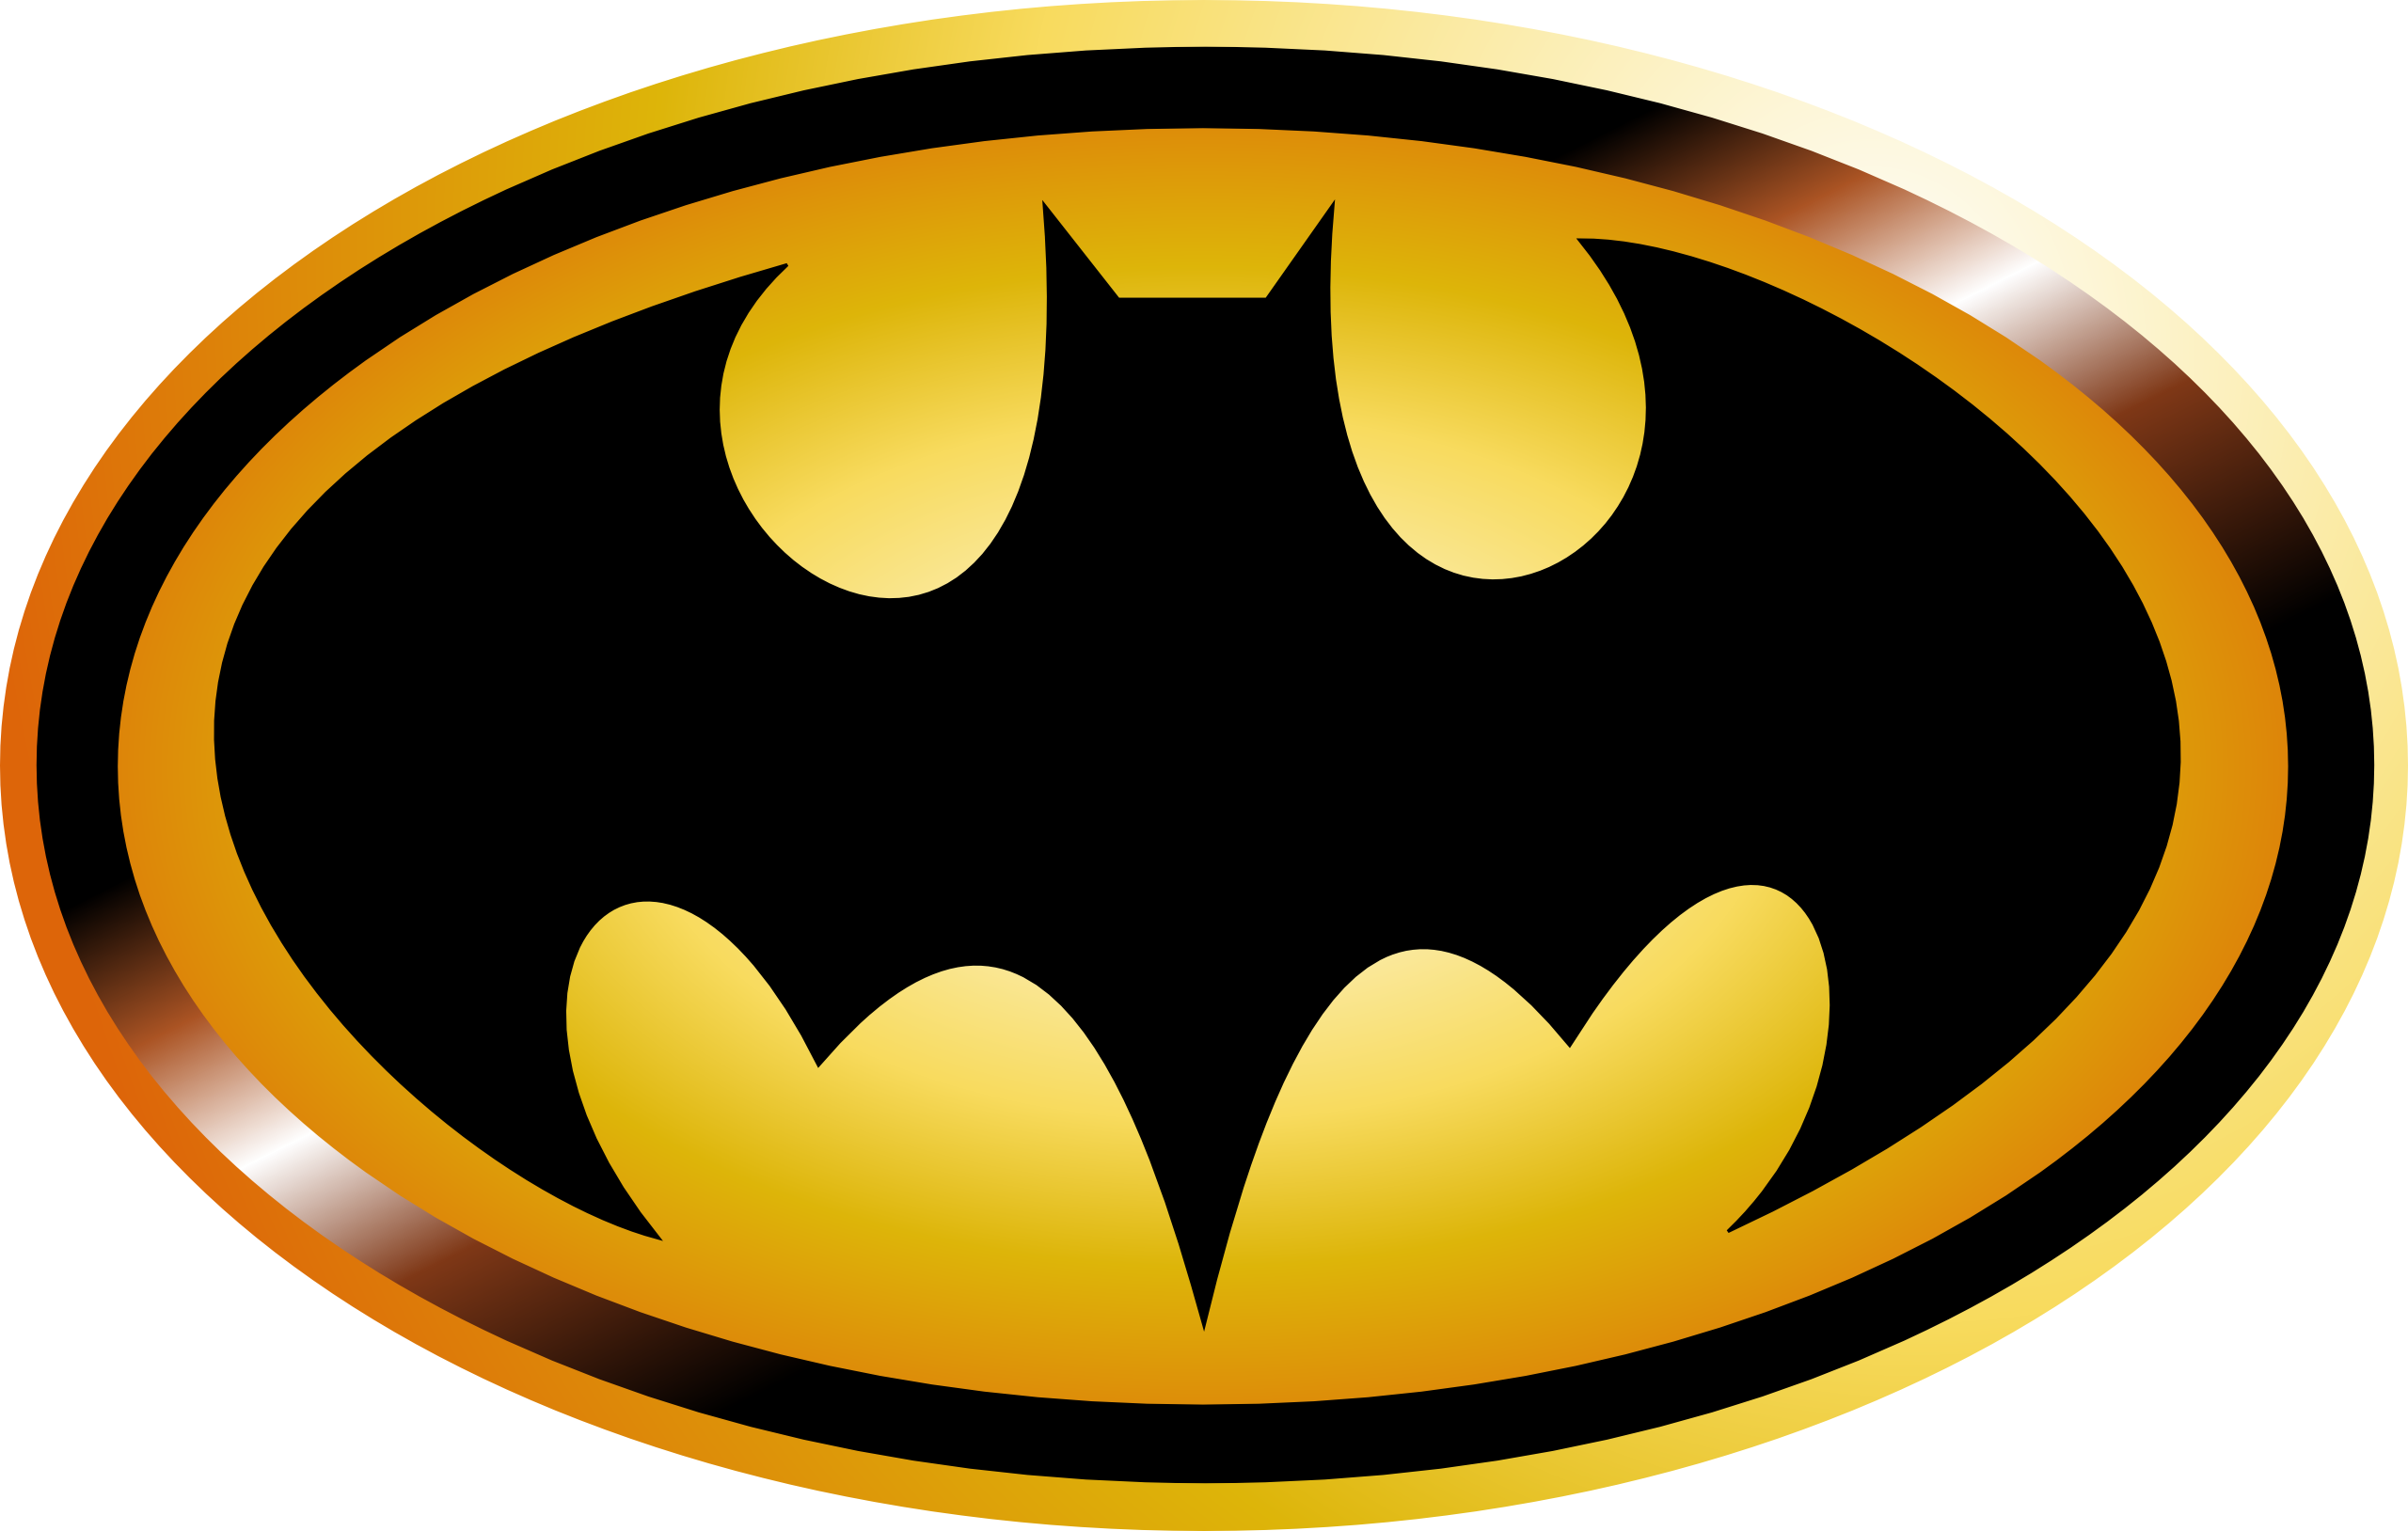 Printable Batman Logo - Clipart library